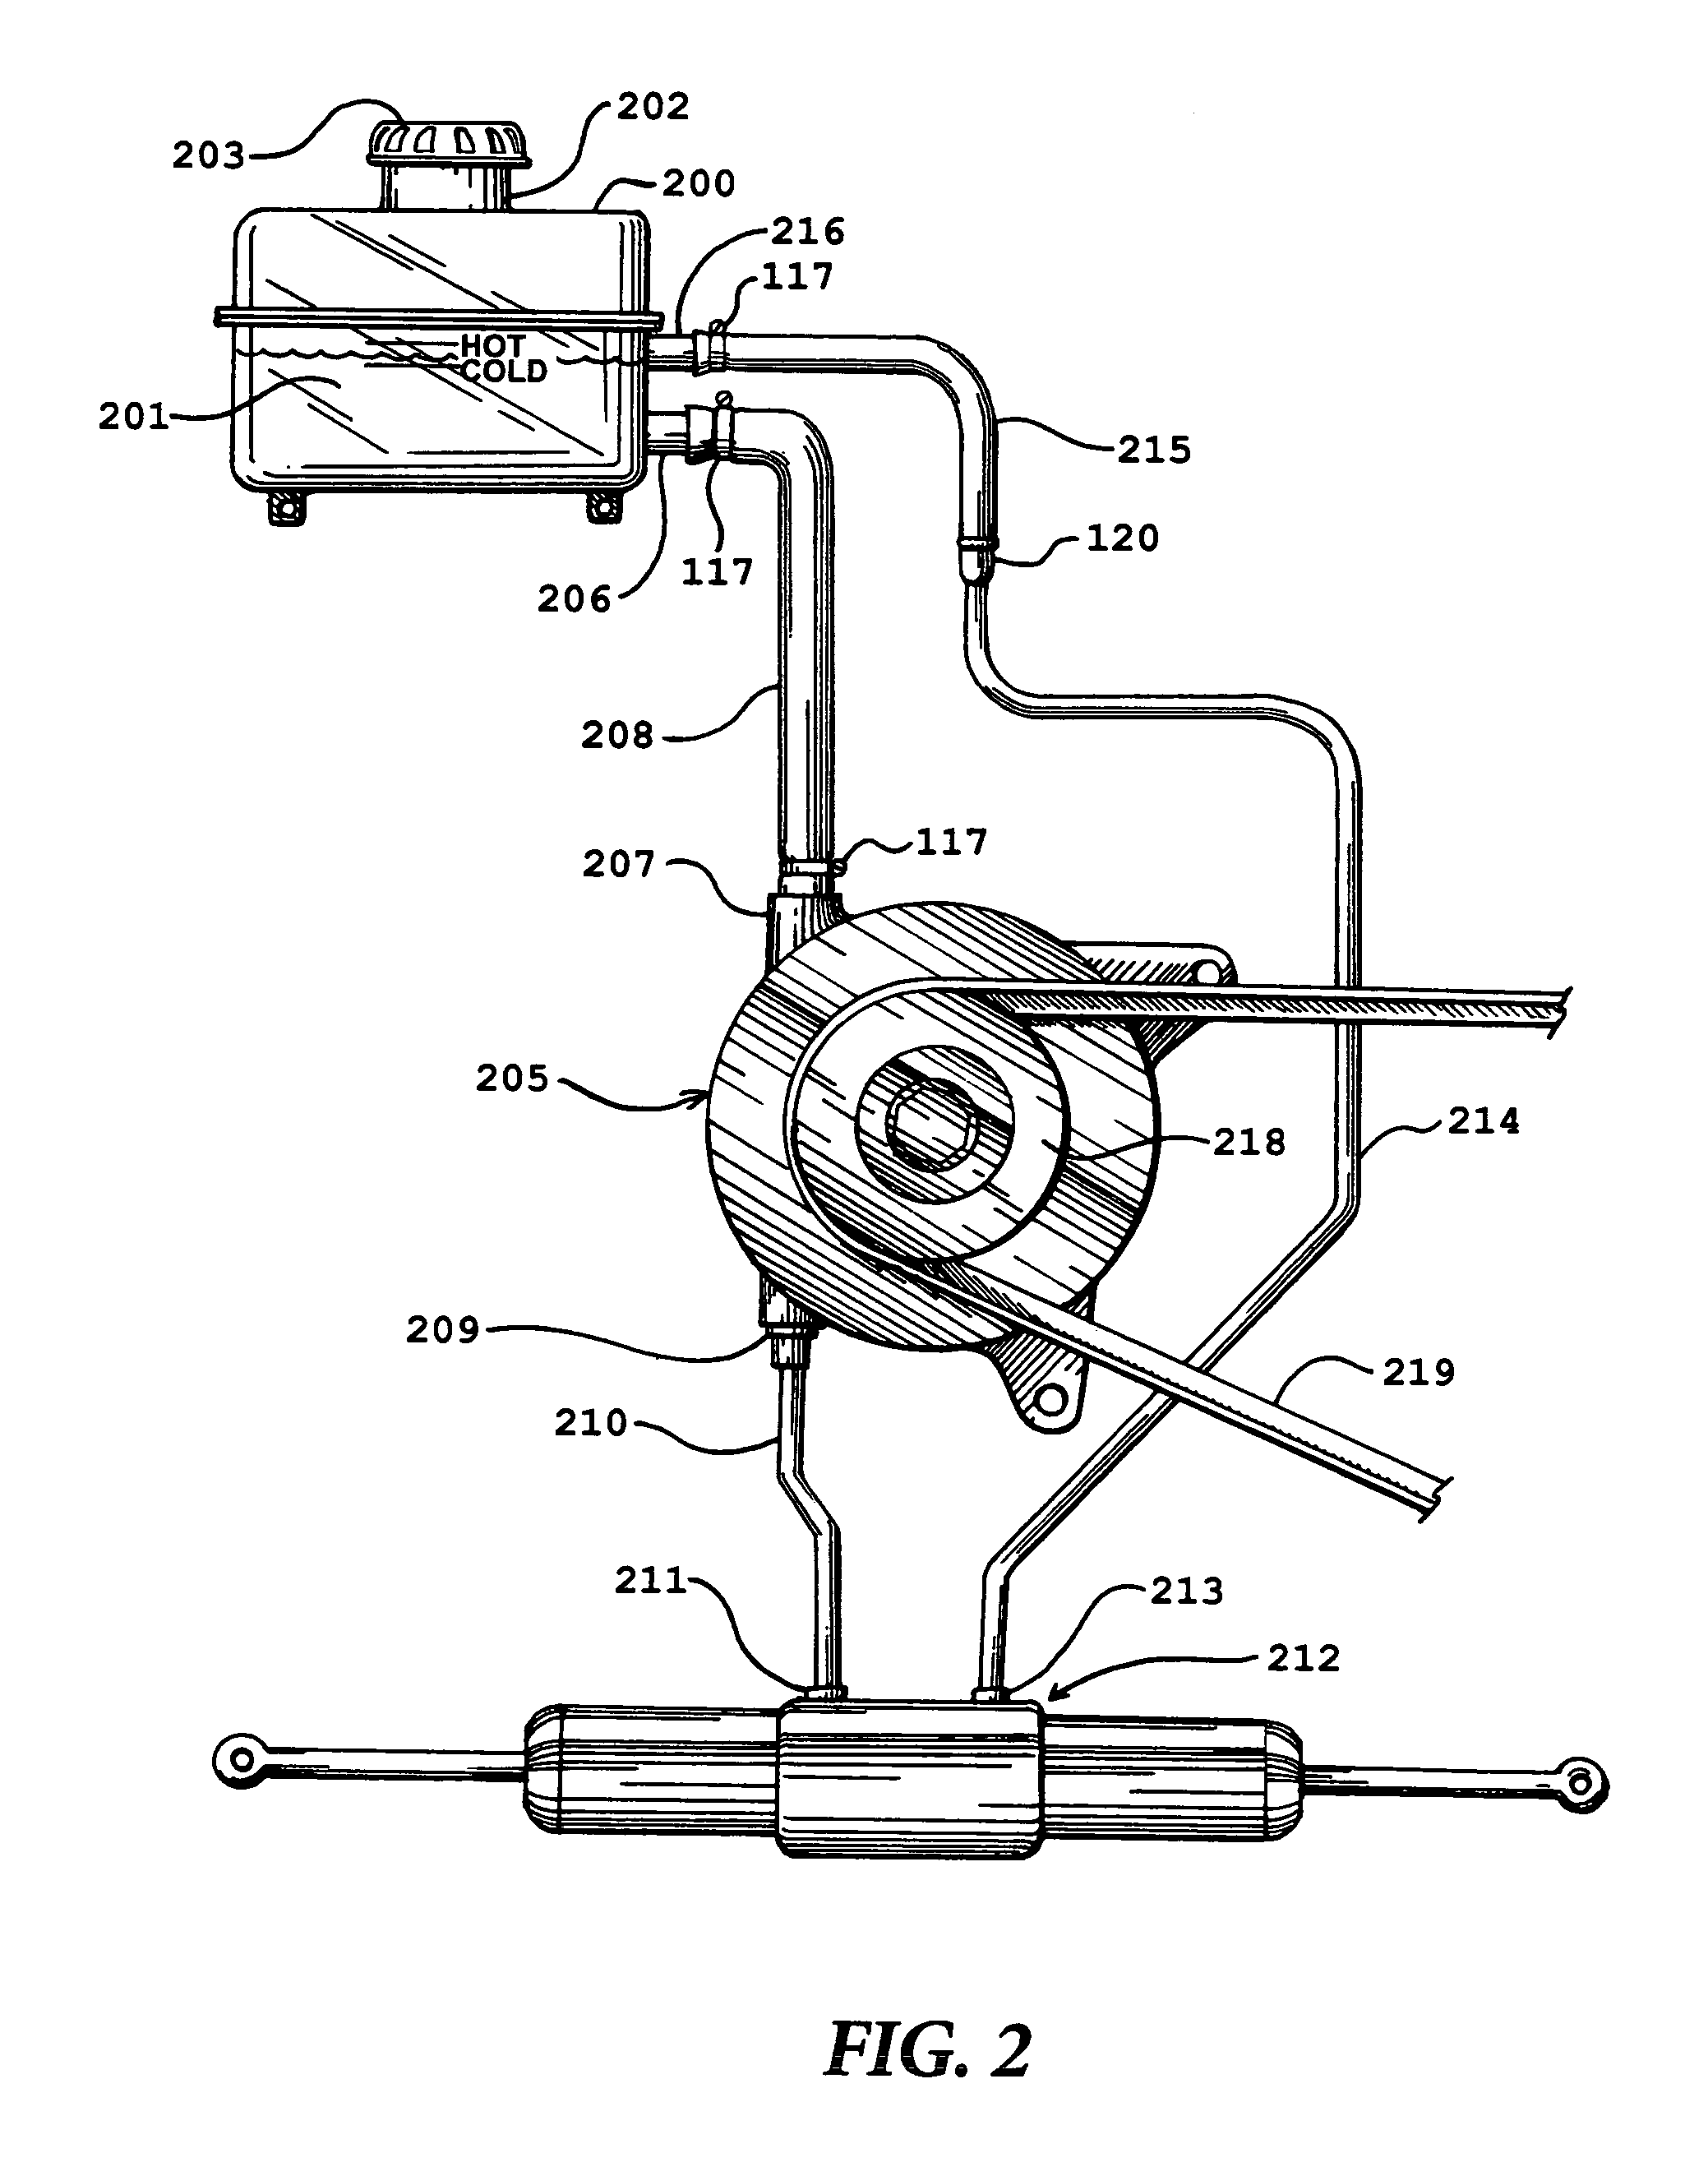 Automatic fluid exchanger